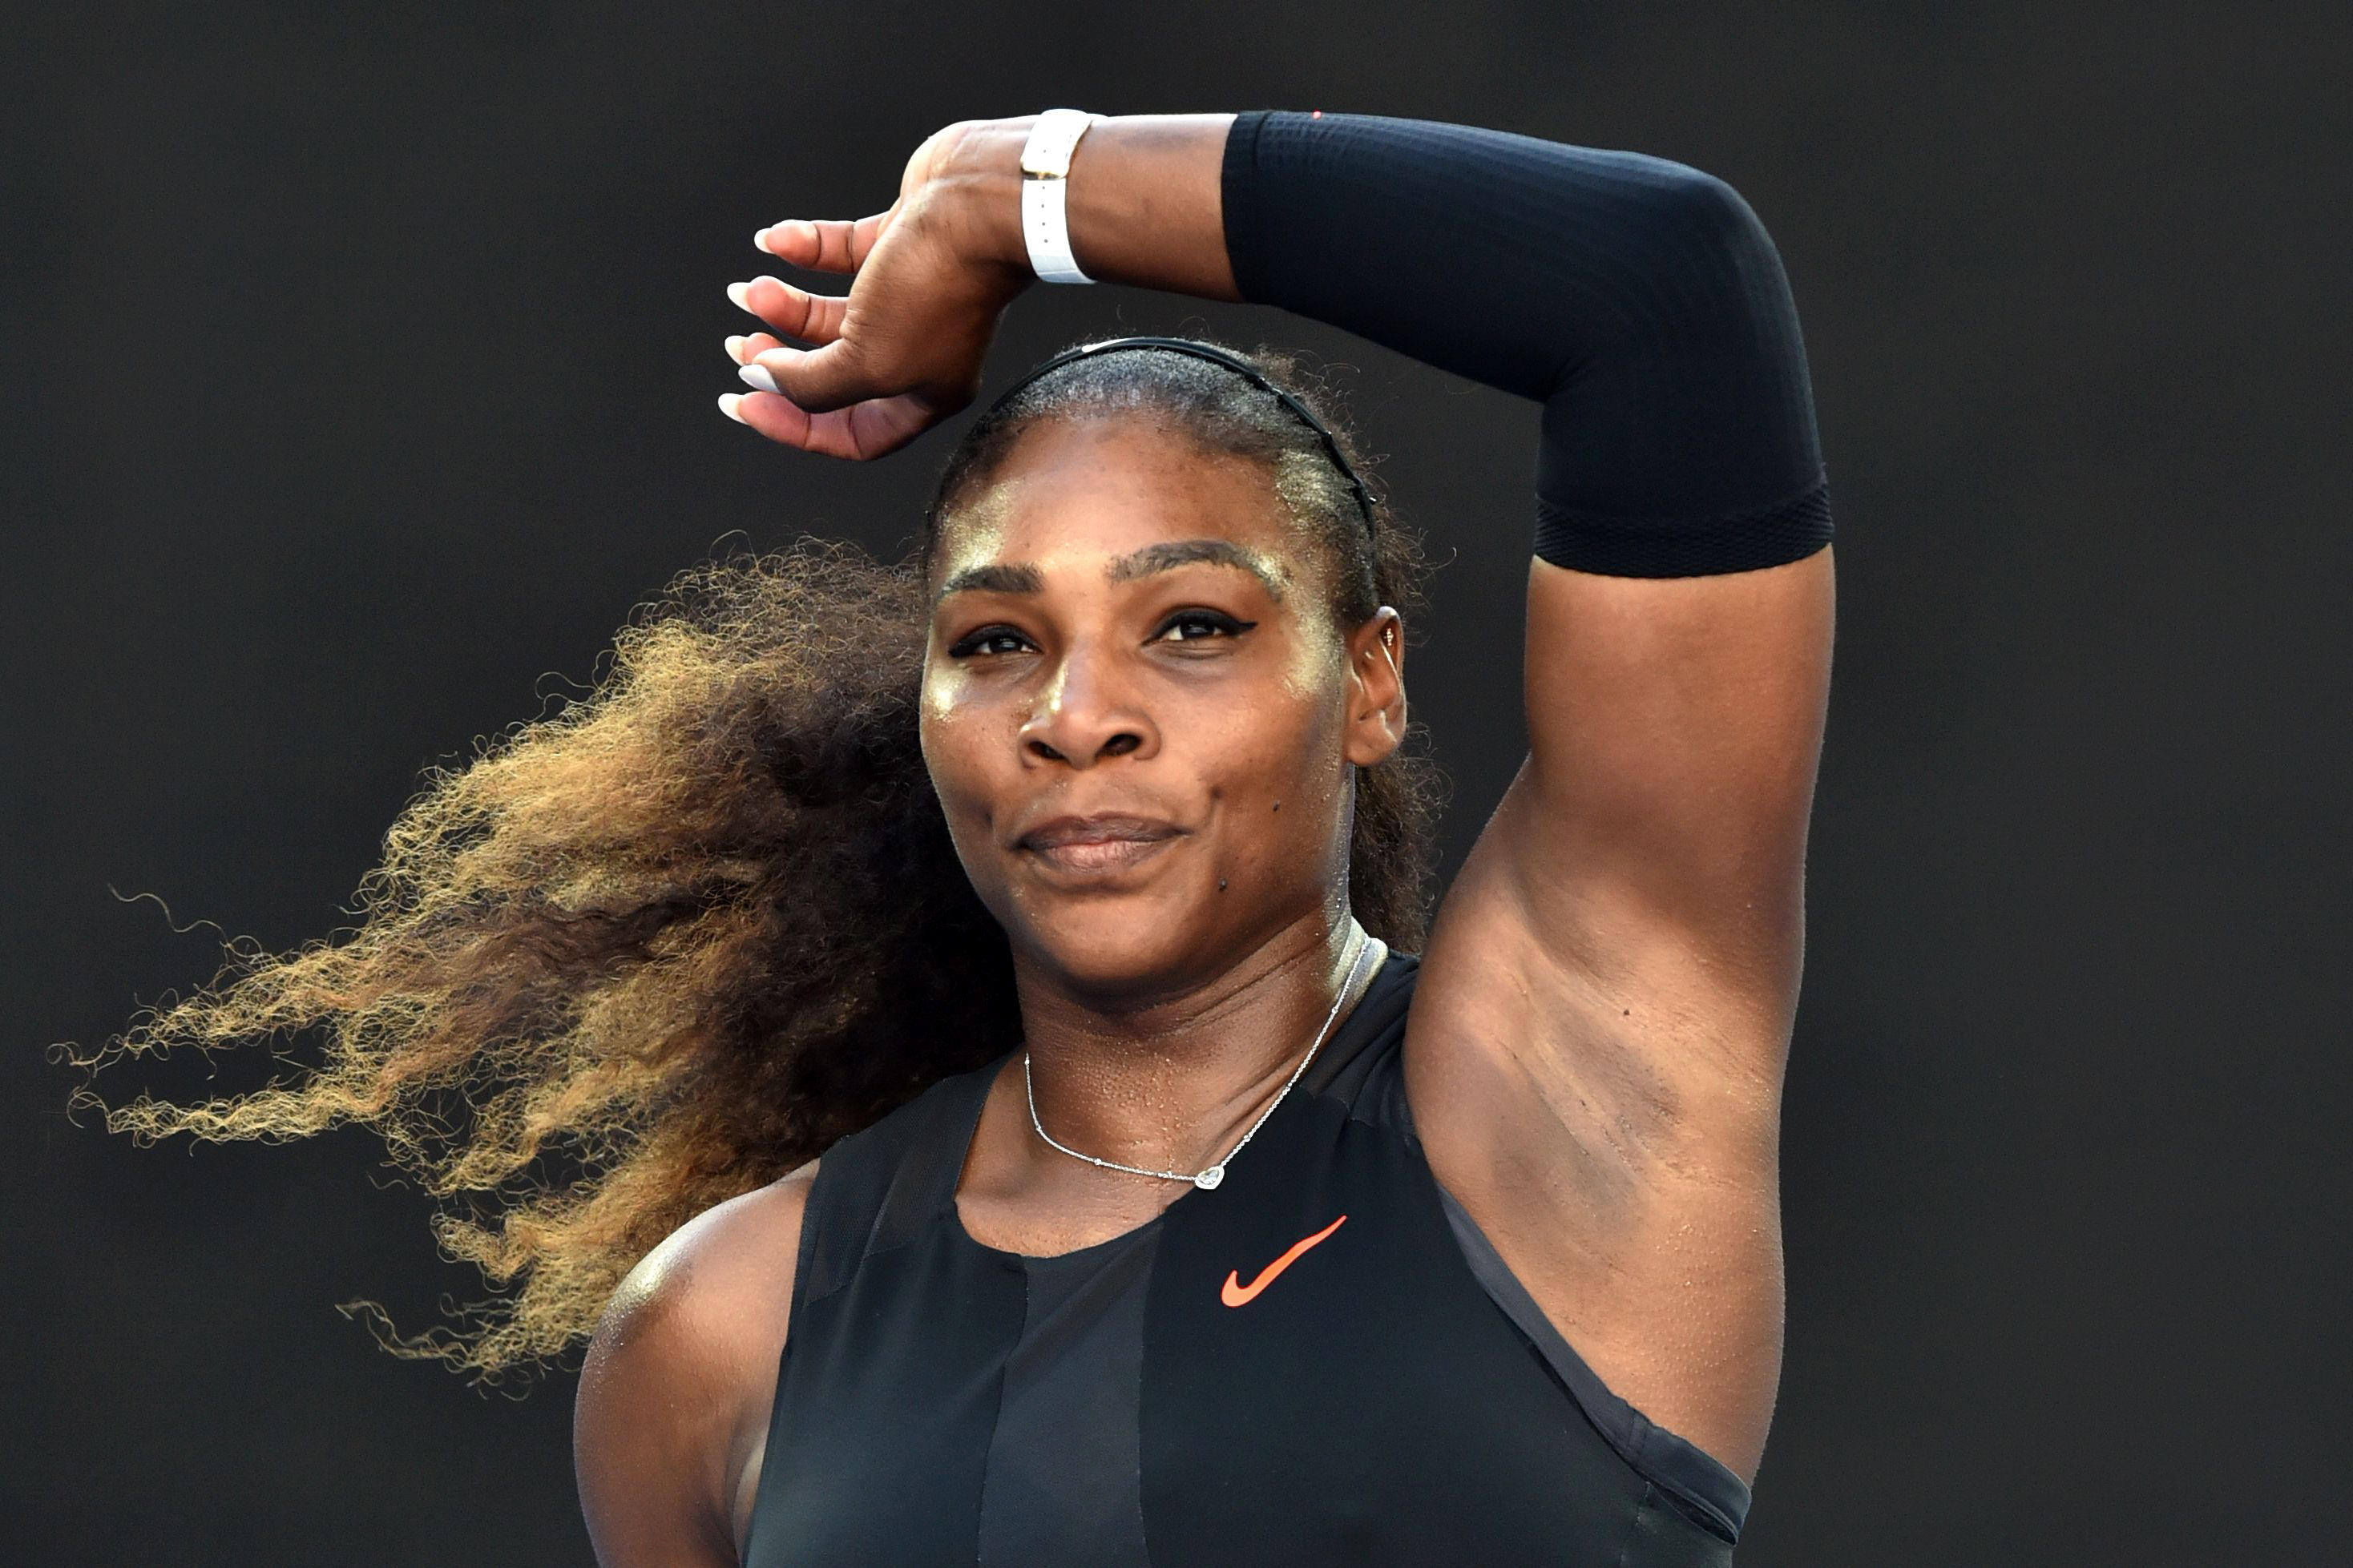 Australian Open finals feature Serena Williams facing sister Venus Williams - CBS News